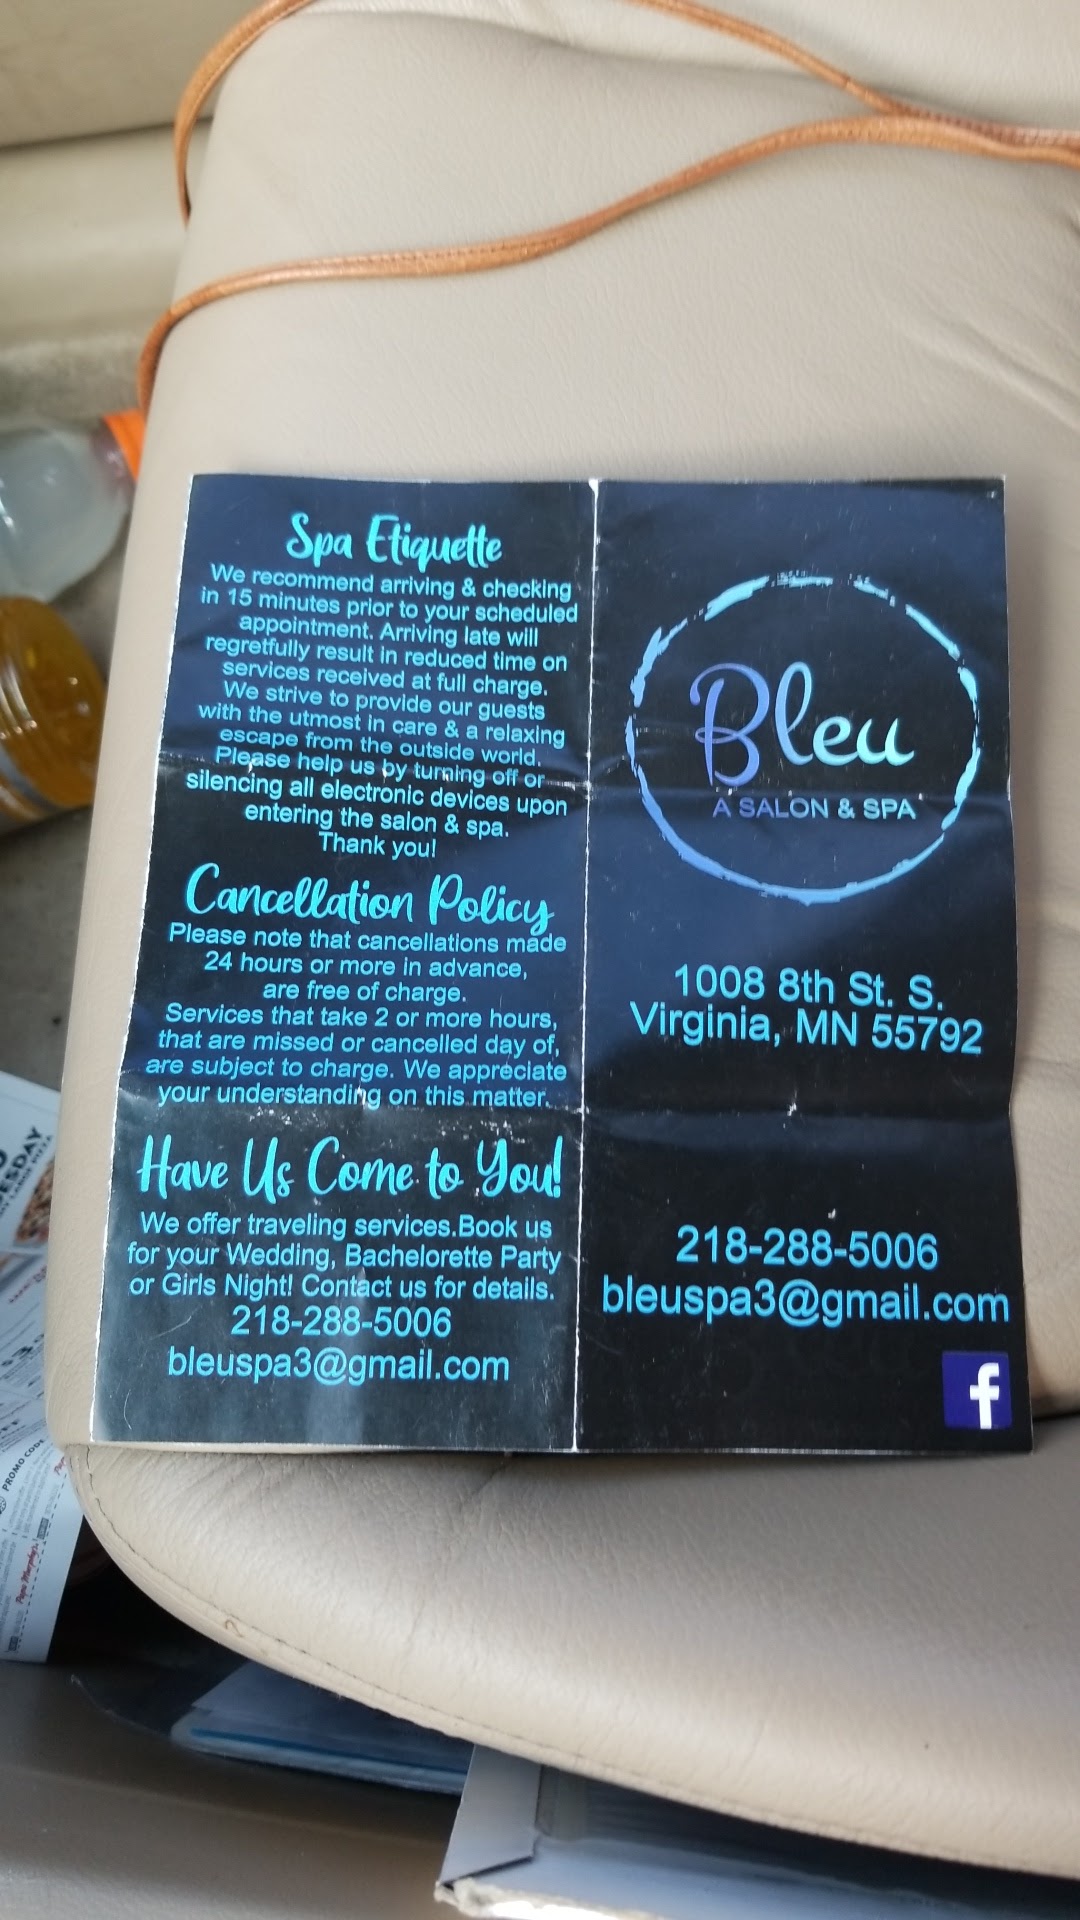 Bleu A Salon & Spa 1008 8th St S, Virginia Minnesota 55792